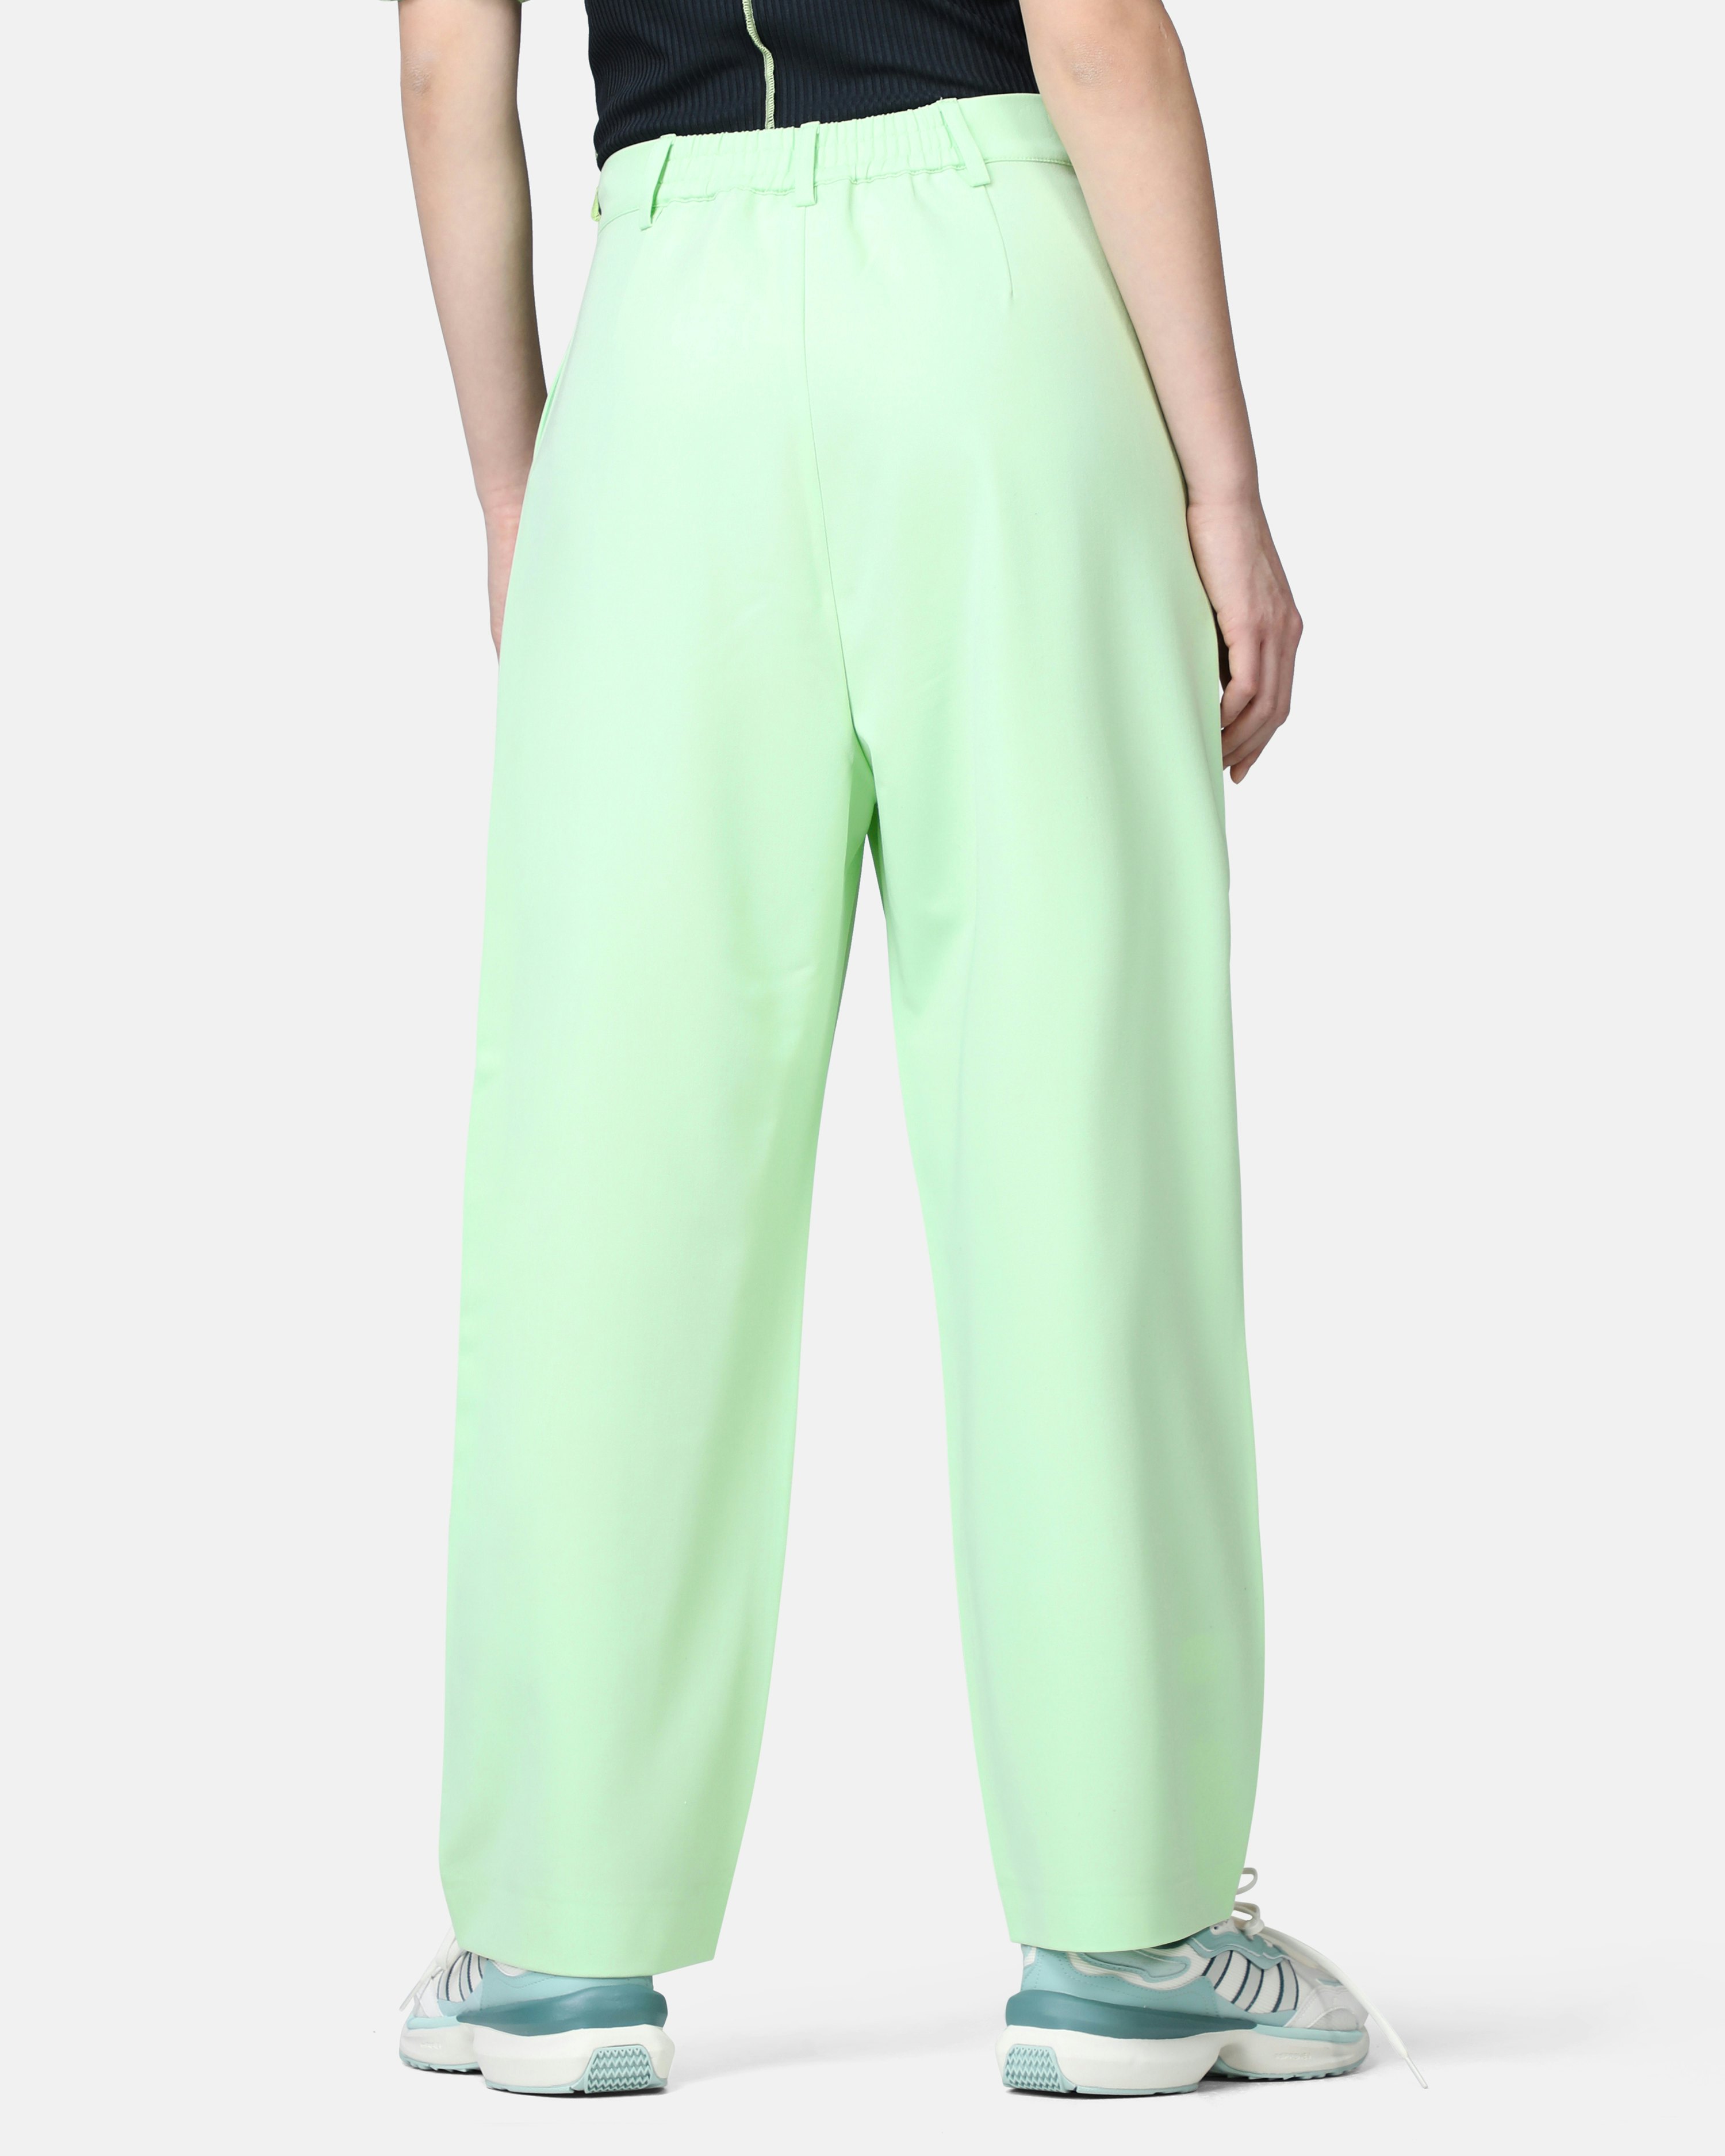 MUK LUKS Women's Petite Pants PS Flare Yoga Pant Green A612529